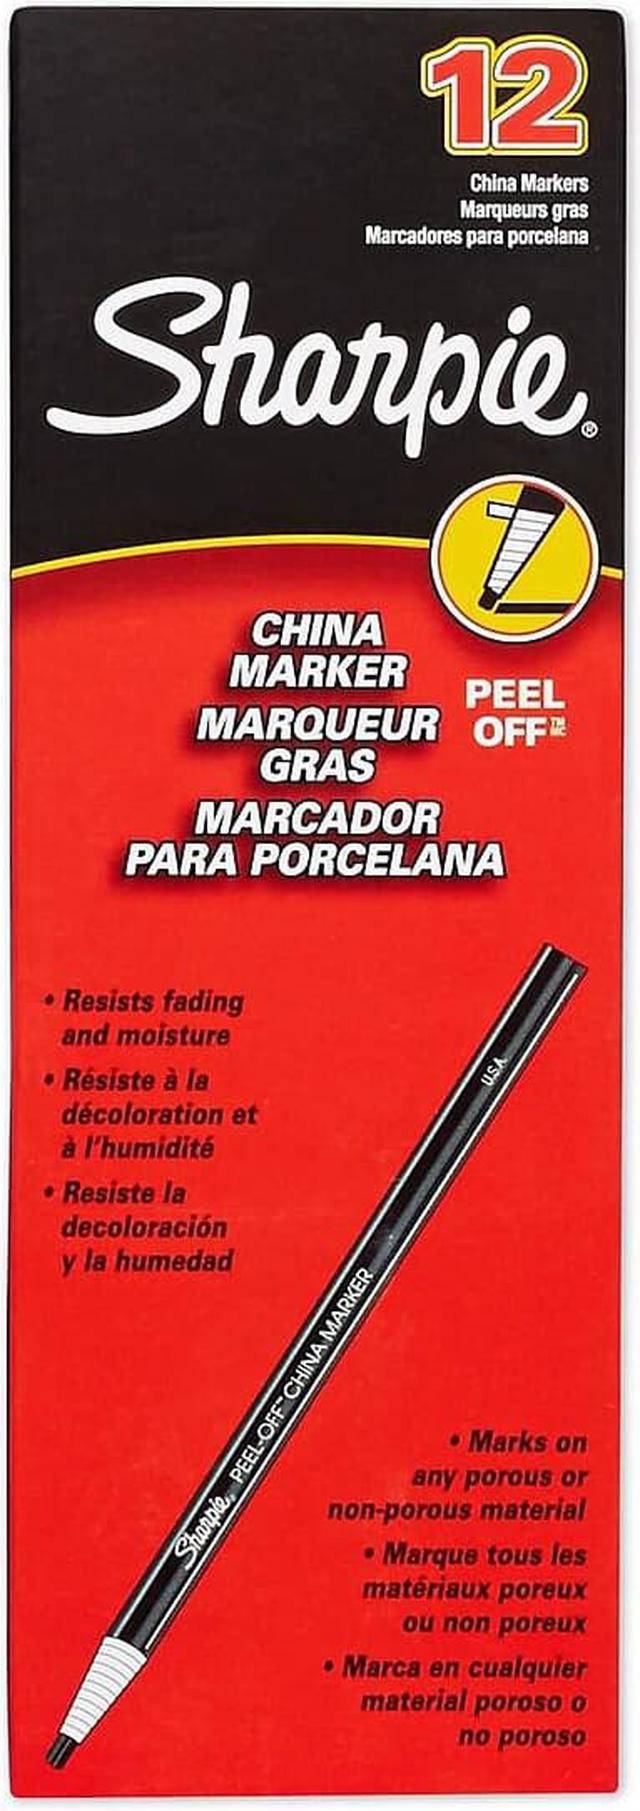 Sharpie Peel-off Marker China, Sharpie China Markers Peel